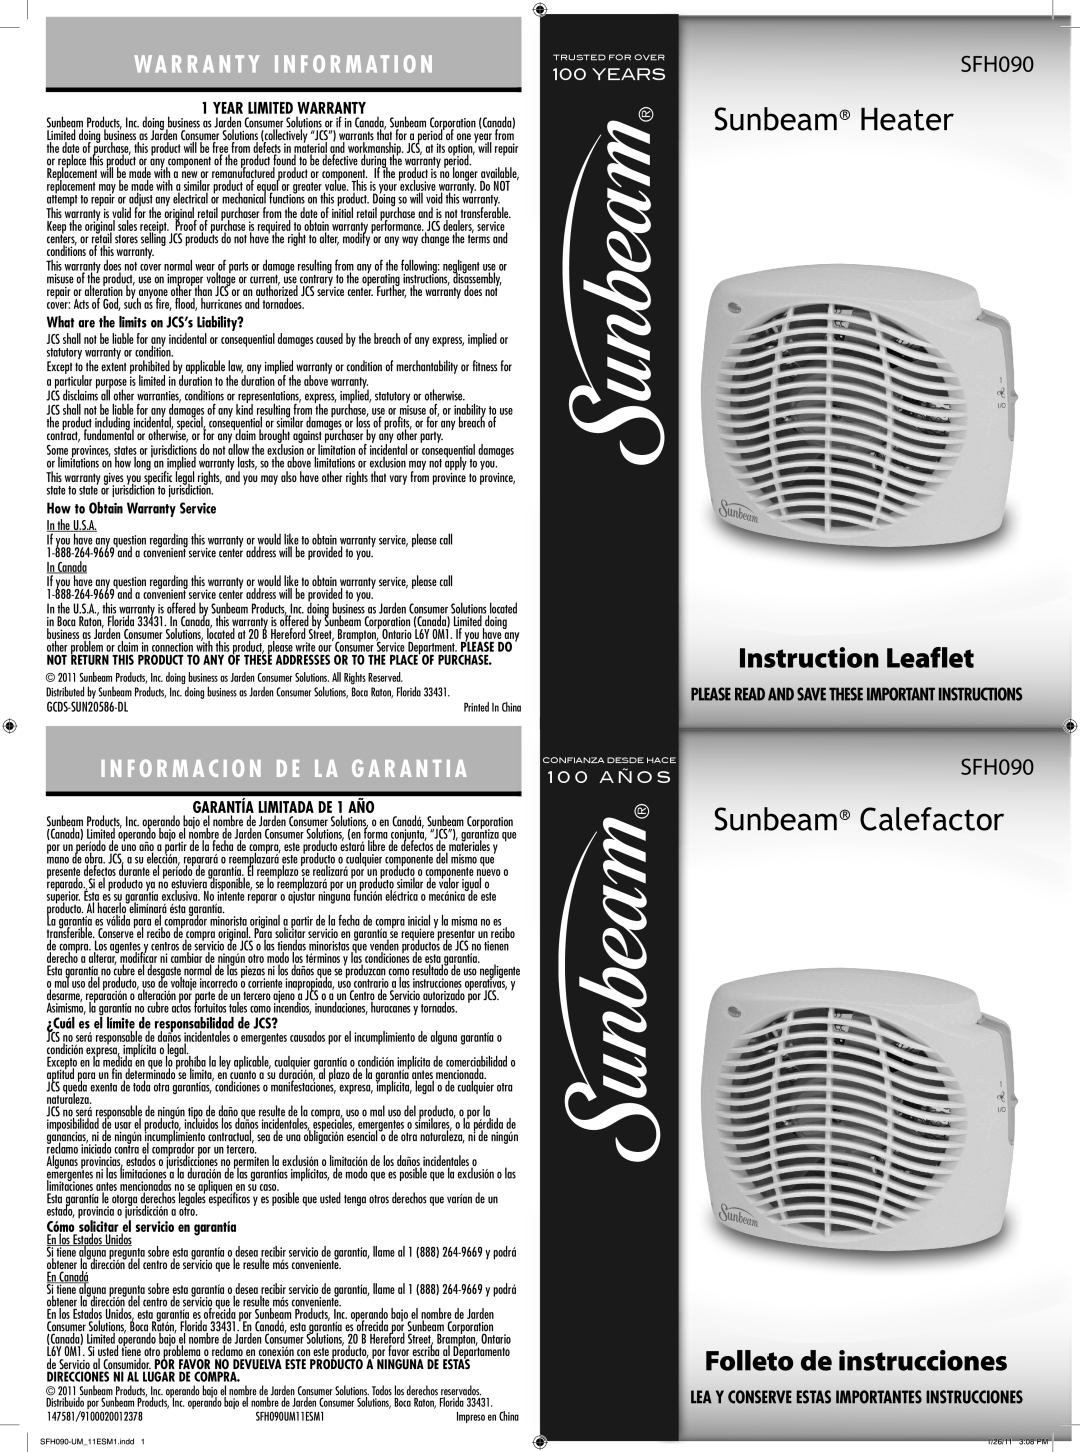 Sunbeam SFH090 warranty Sunbeam Heater, Sunbeam Calefactor, Instruction Leaflet, Folleto de instrucciones, Years, 100 AÑOS 